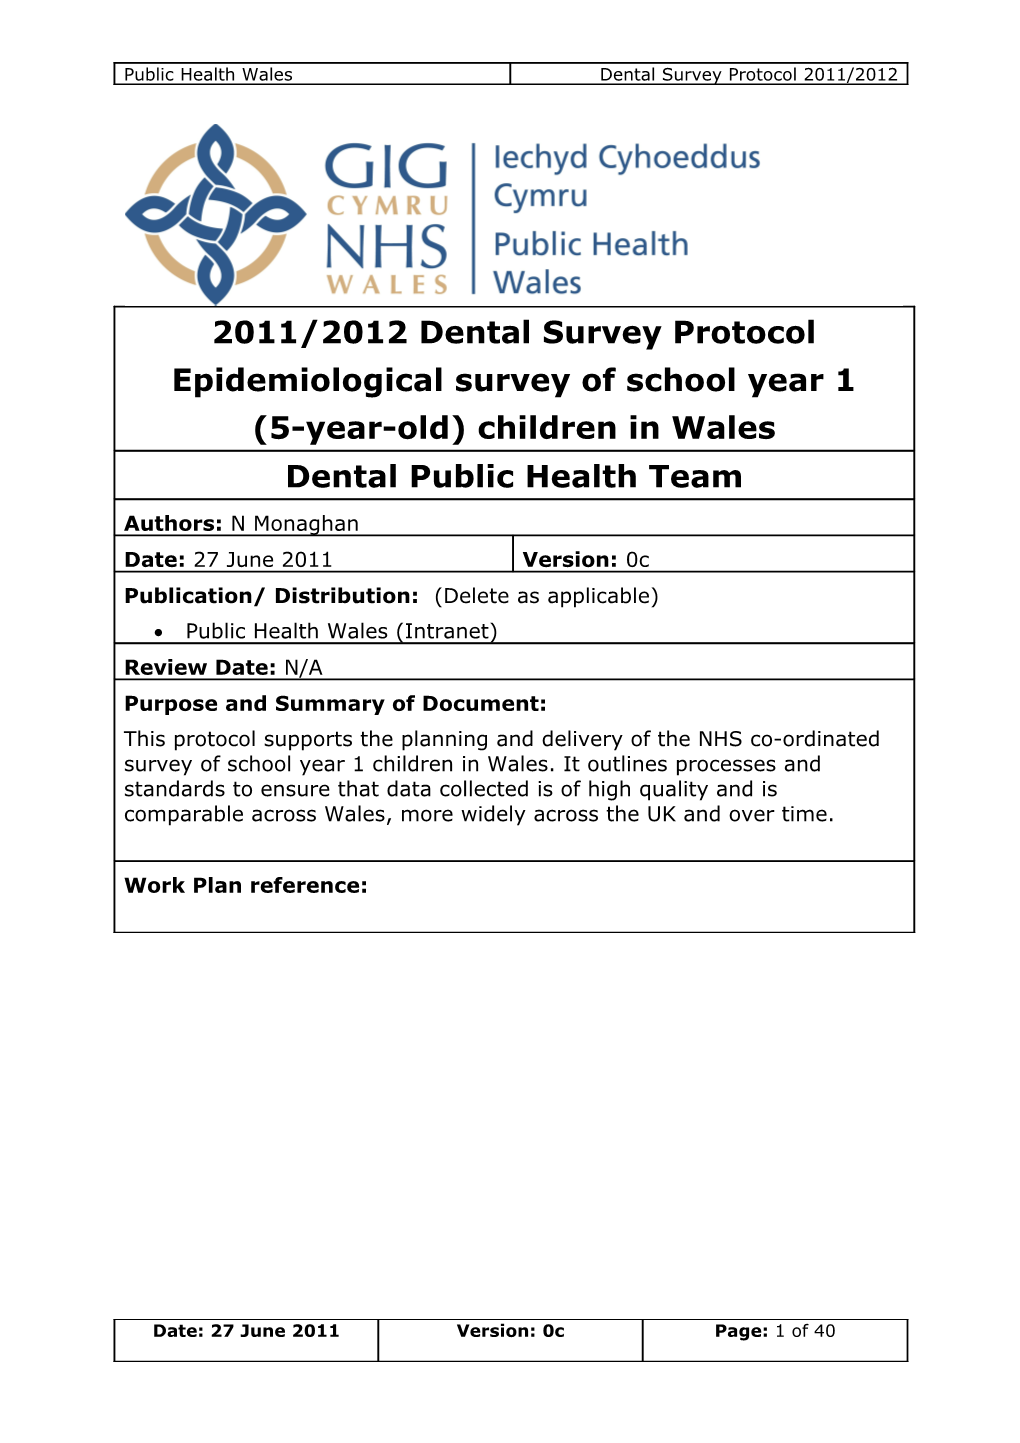 Dental Survey of School Year 1 Children in Wales 2011/2012